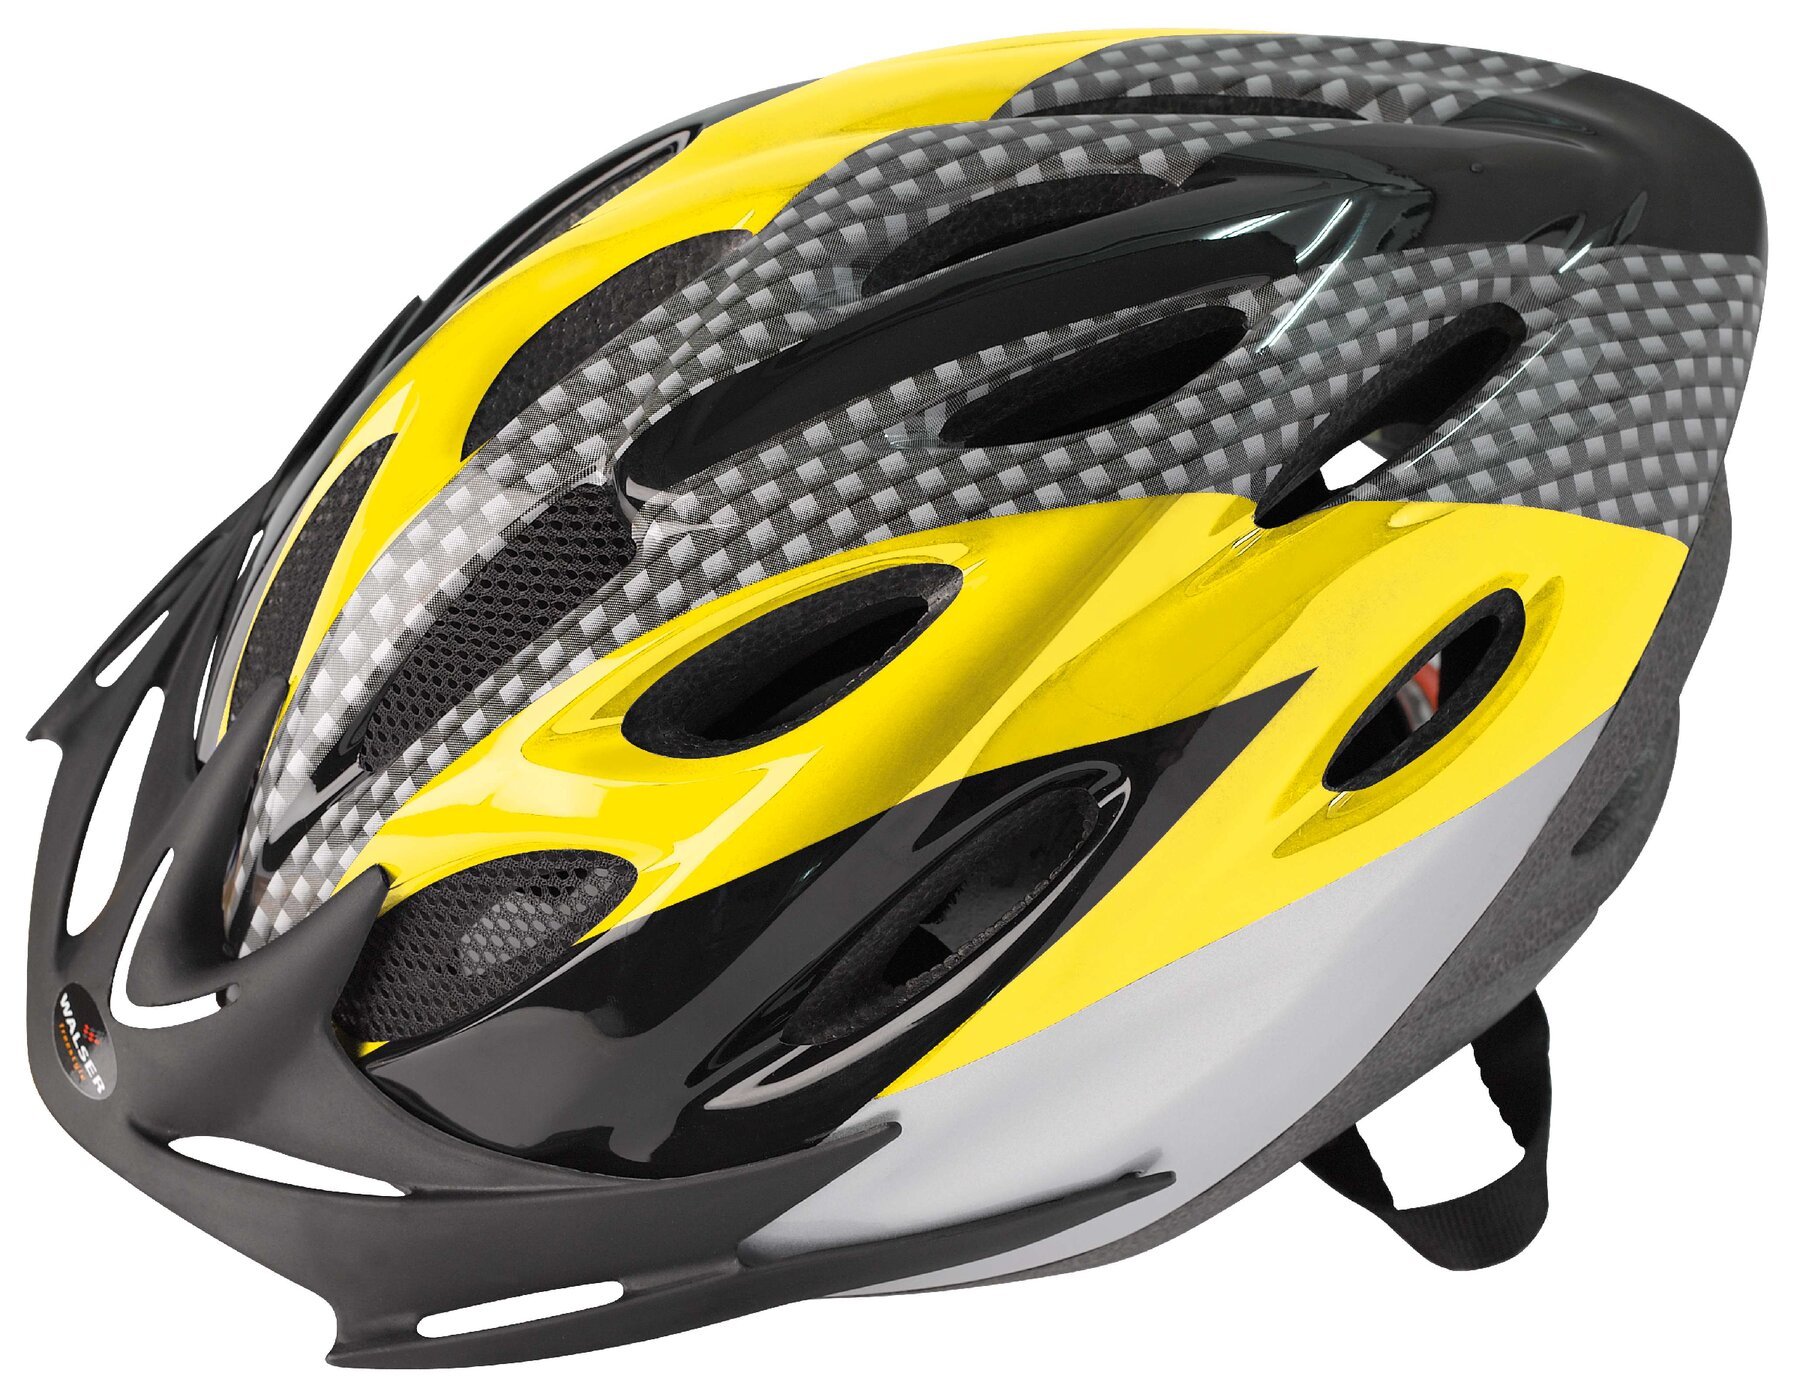 Cycling helmet 48-54 cm Sprinter NXTG yellow